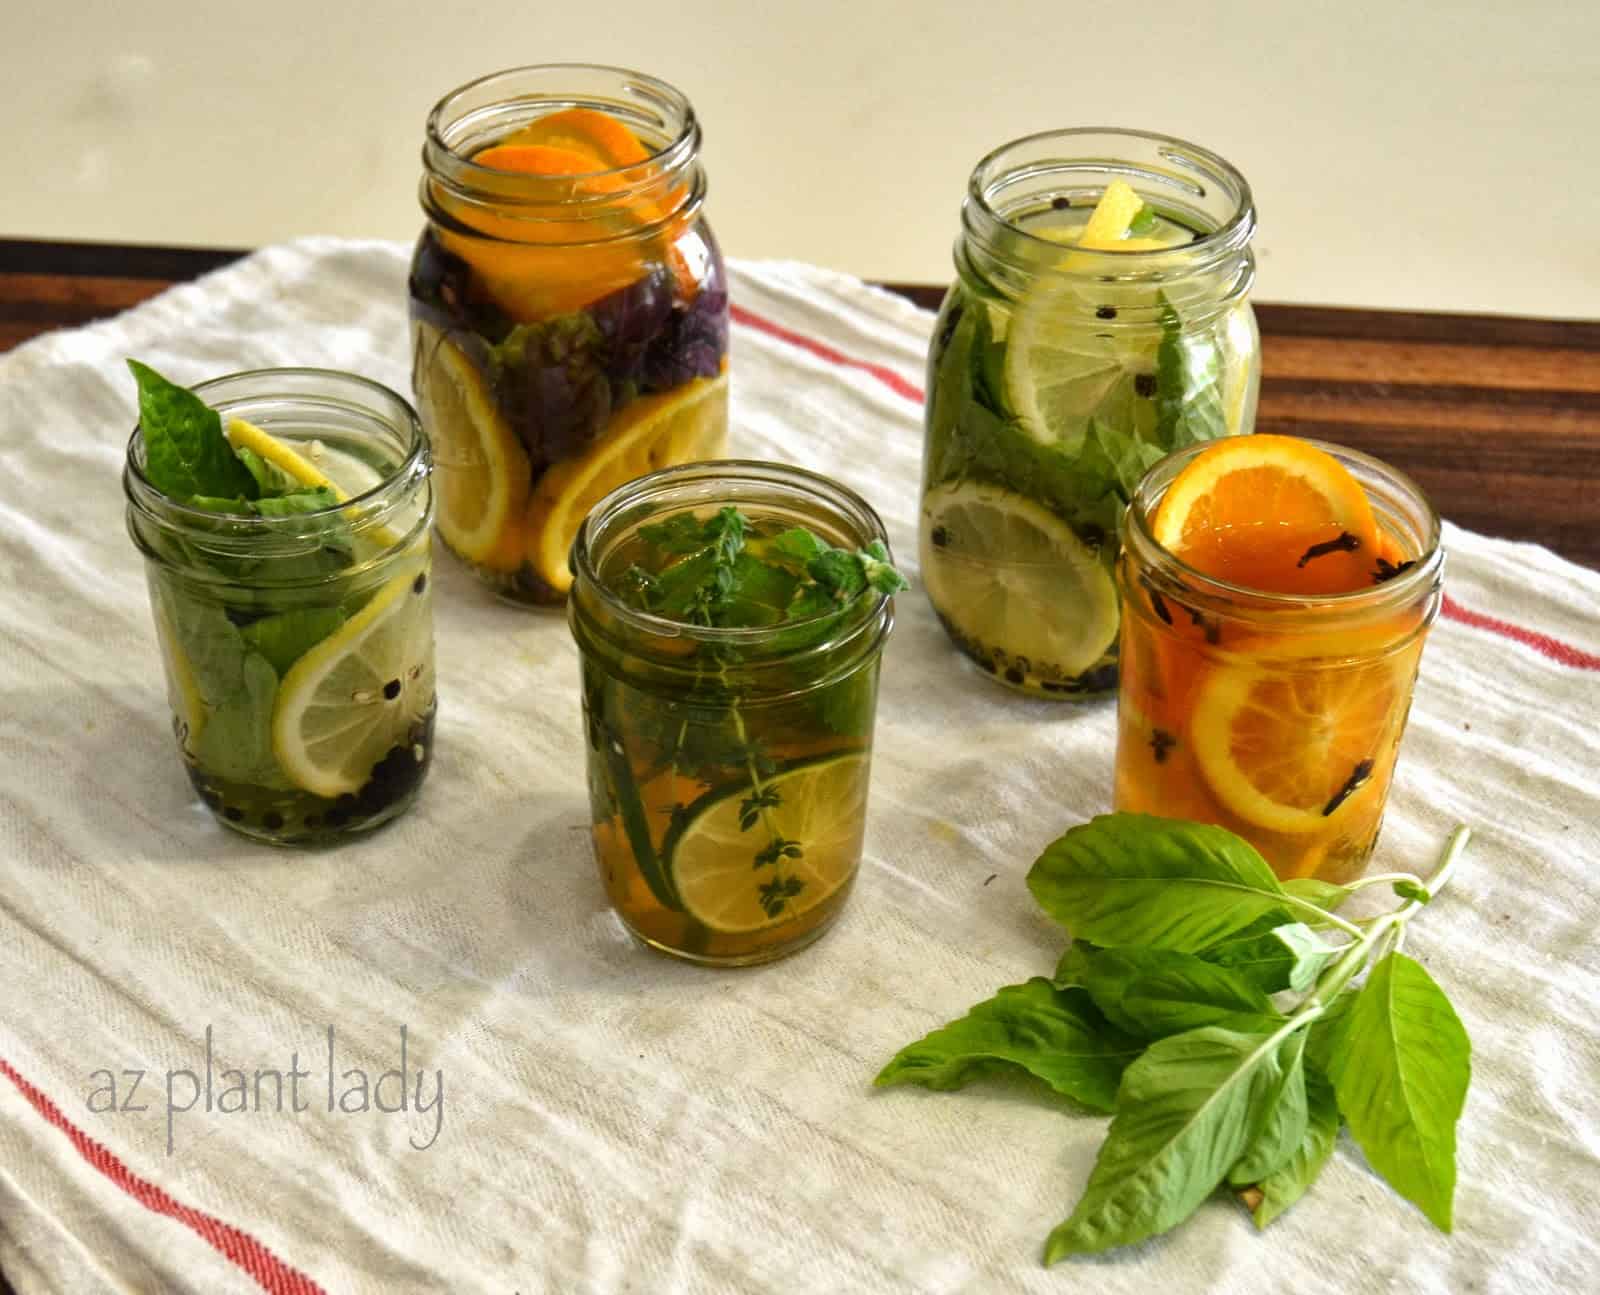 Citrus and mint air freshener jars